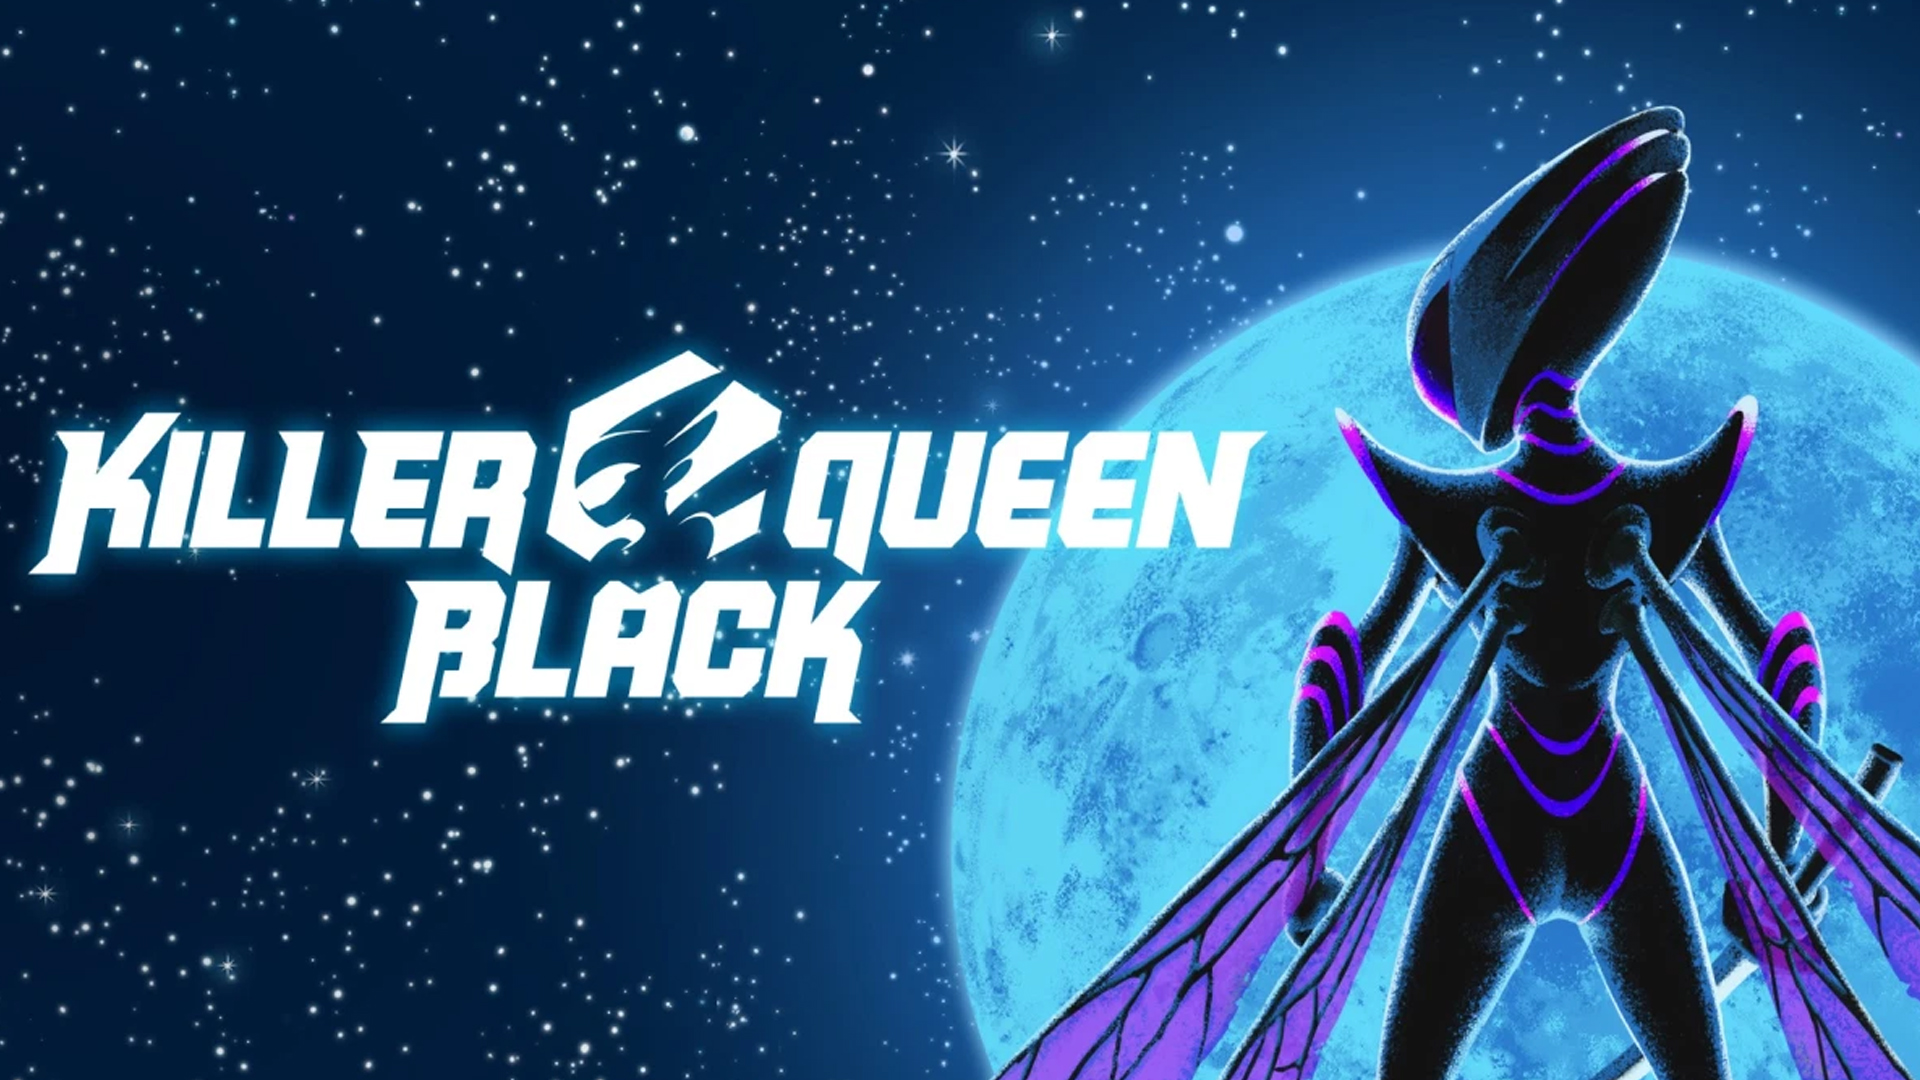 No dia 23 de feveiro, Killer Queen Black estará disponível no catálogo Xbox Game Pass